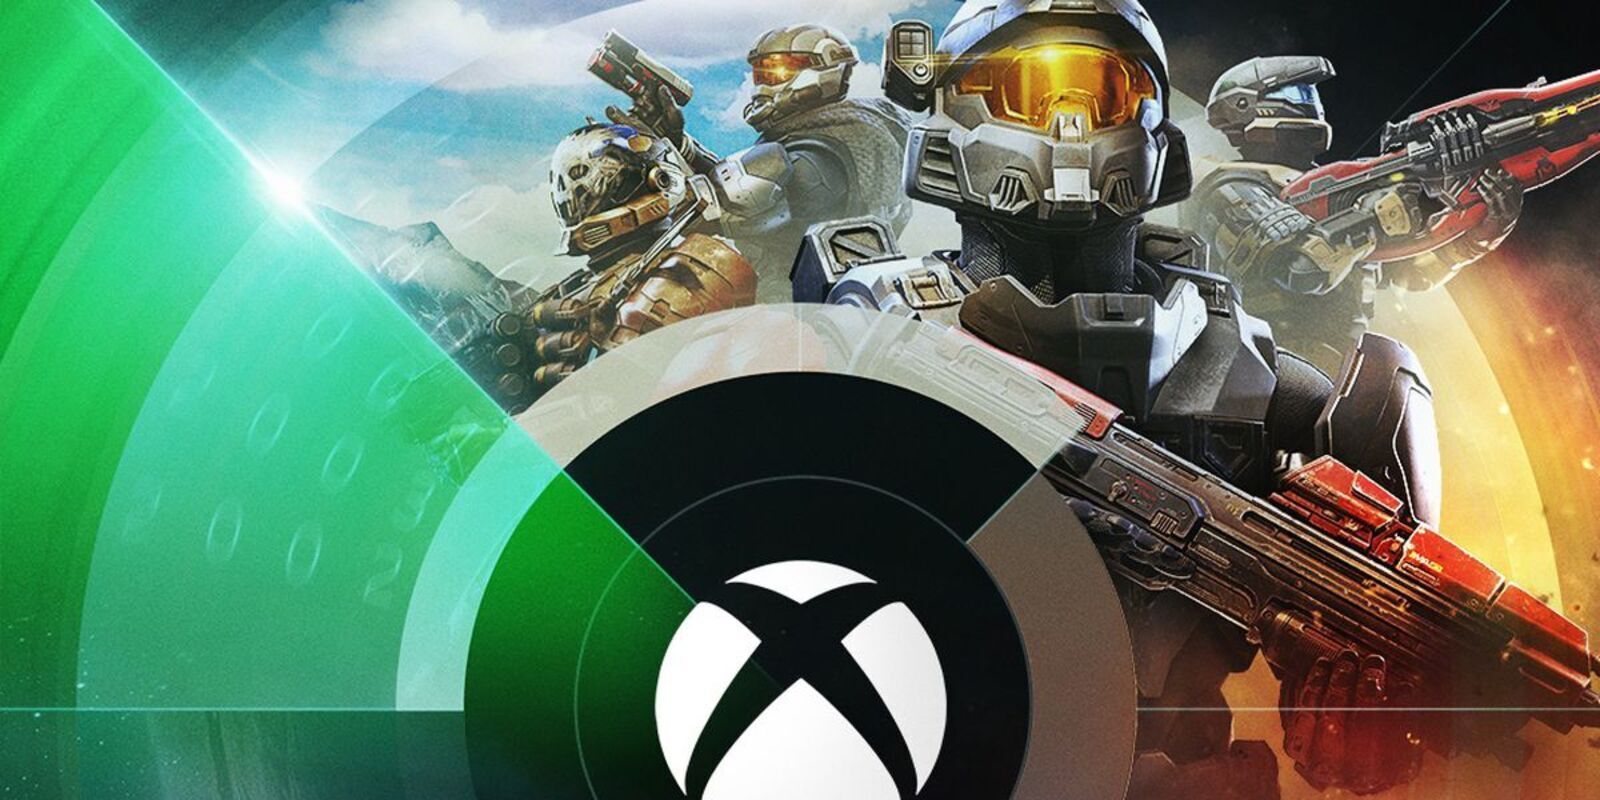 The Outer Worlds 2 revealed at Xbox/Bethesda E3 2021 Showcase